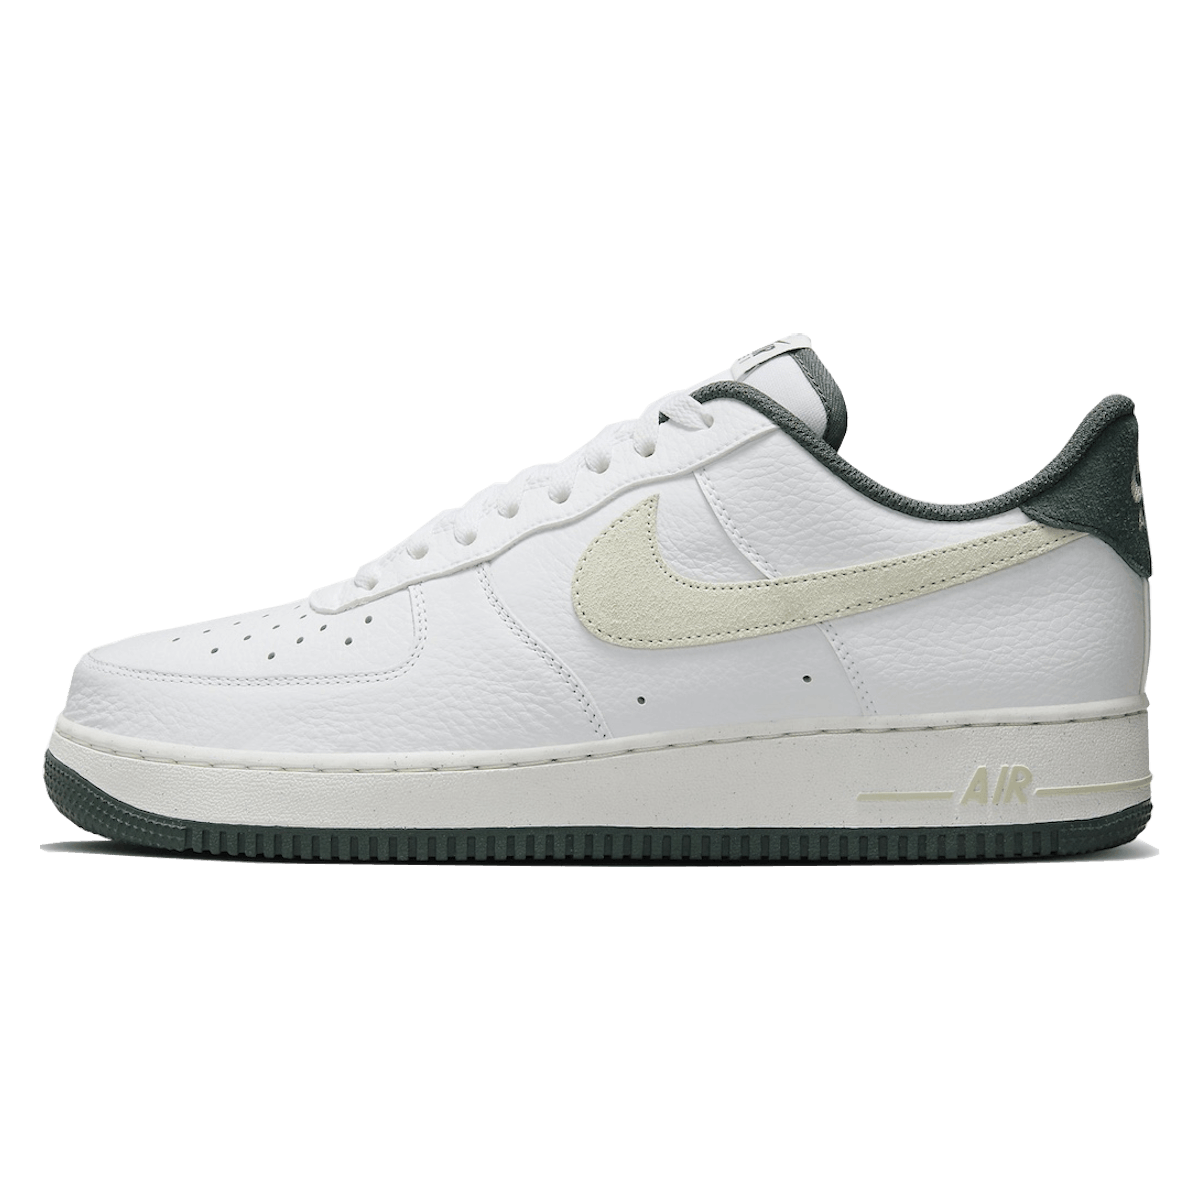 Nike Air Force 1 ’07 LV8 "Vintage Green"